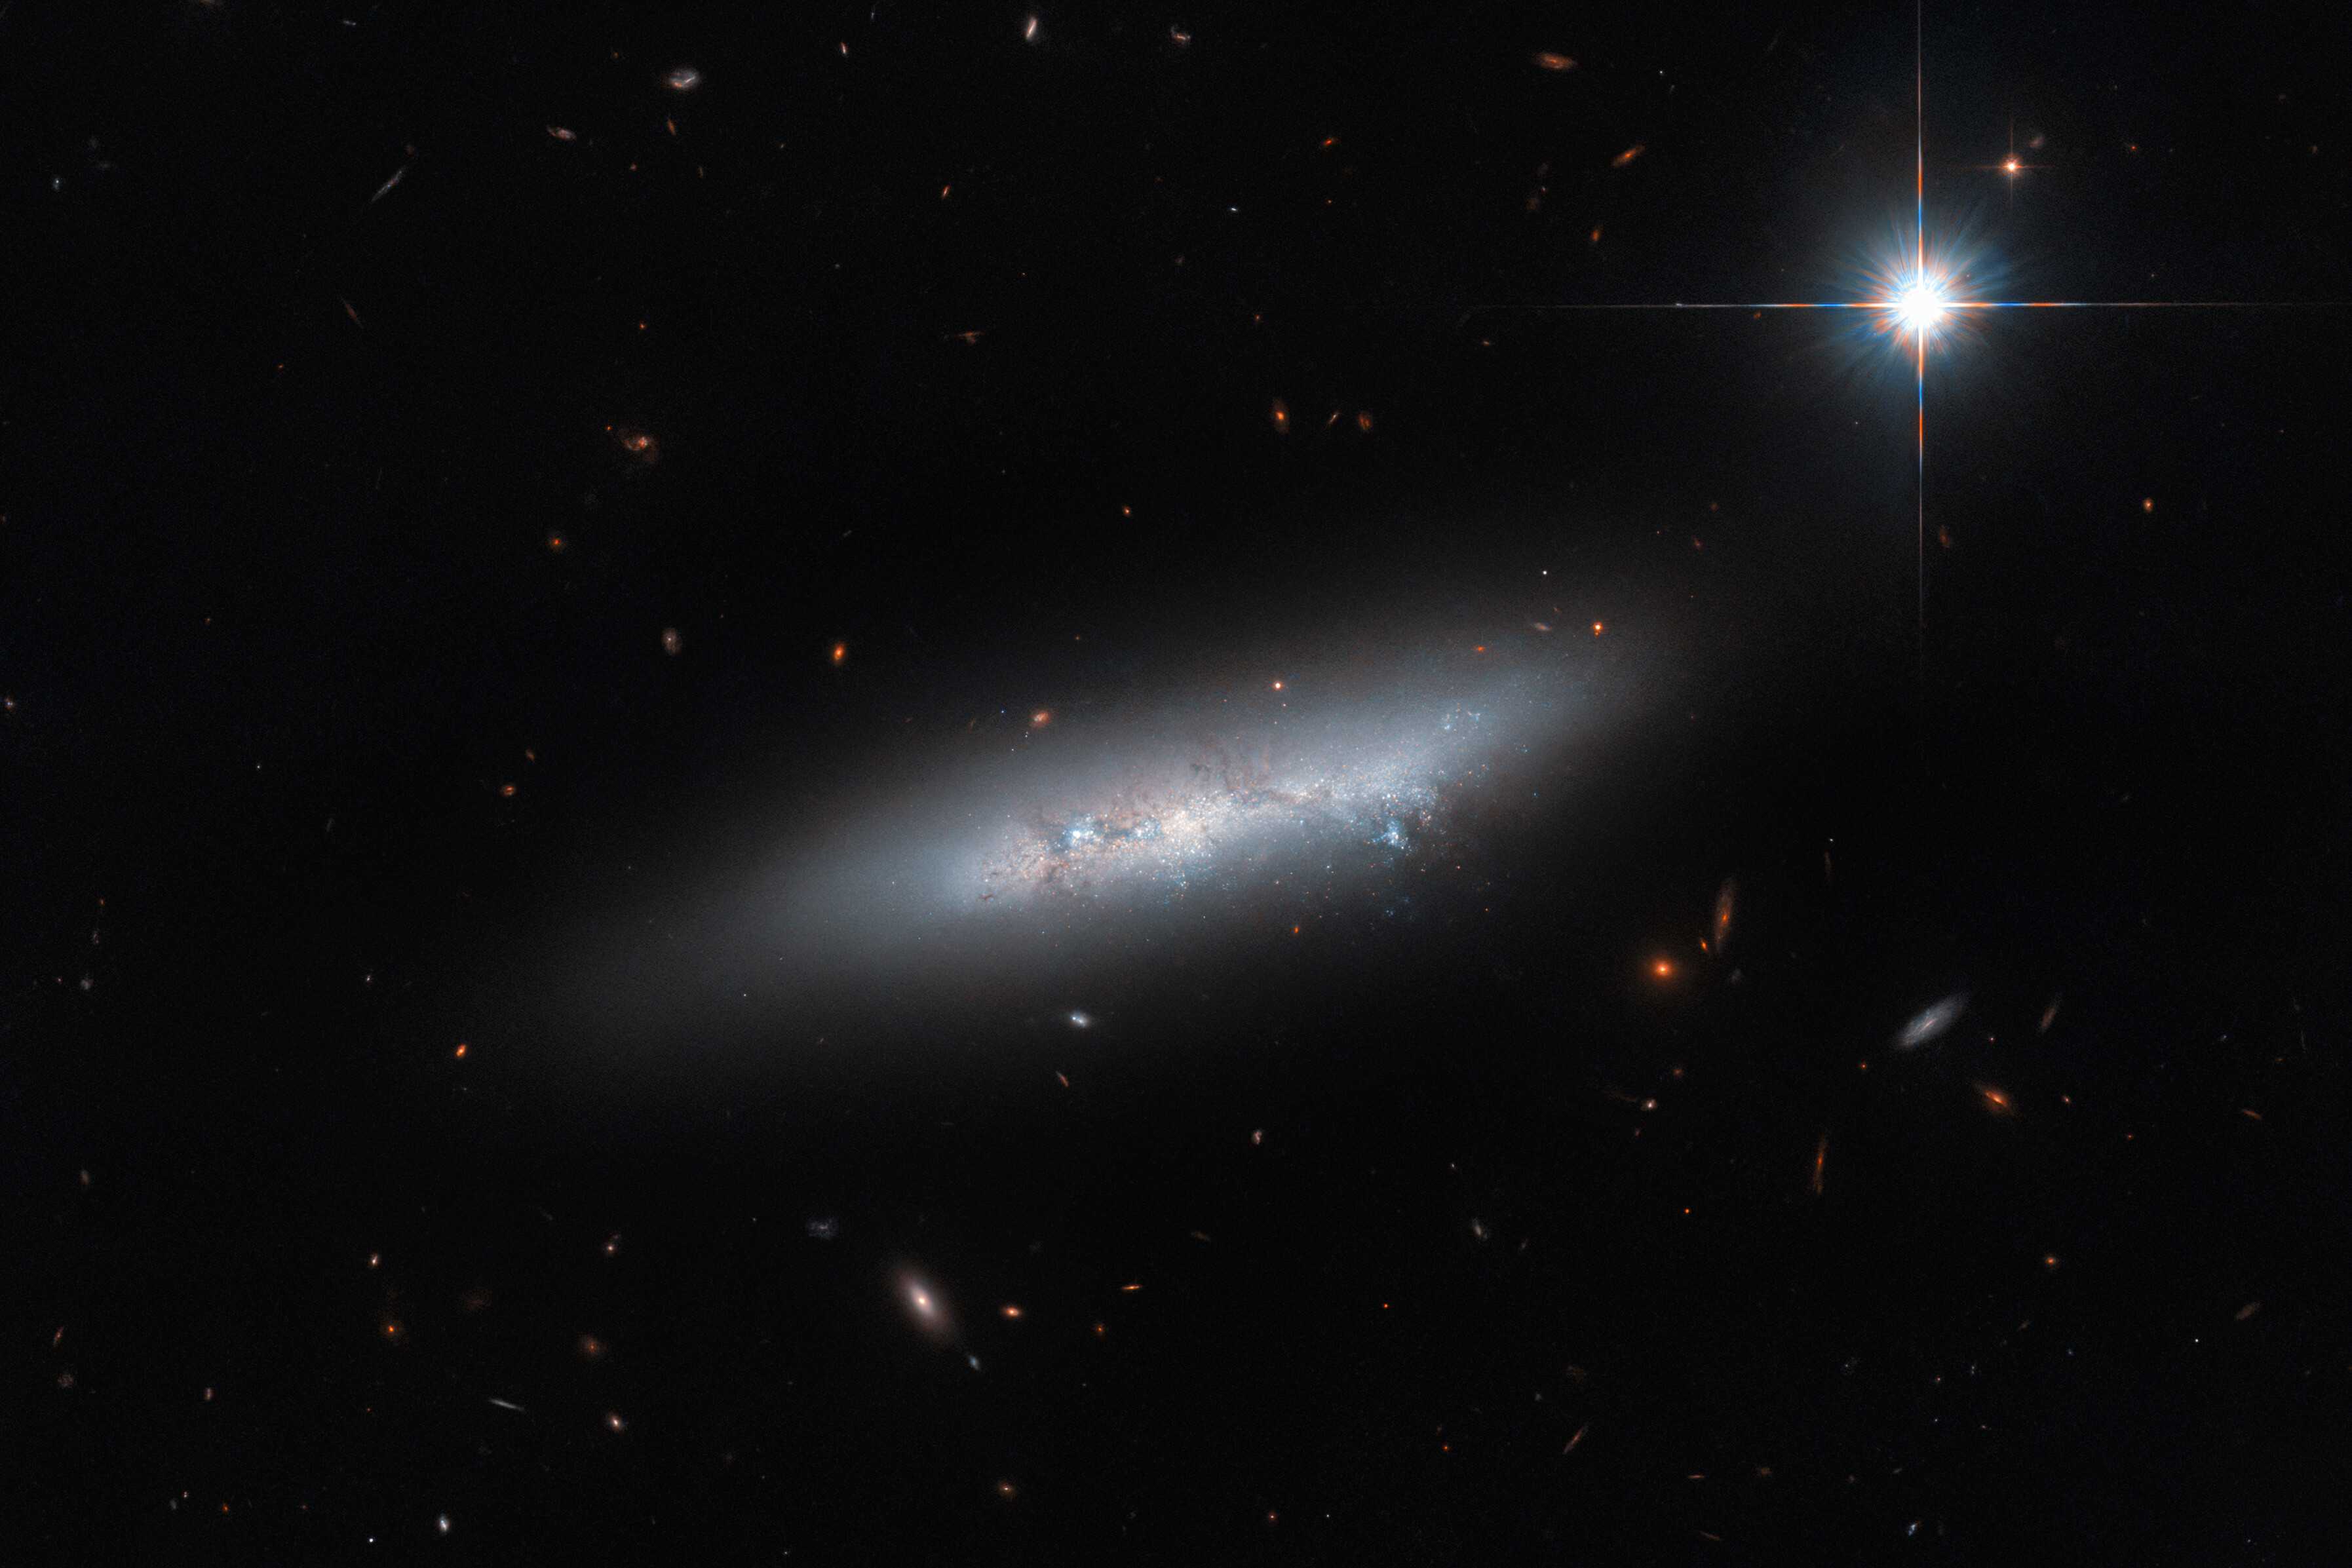 Как мазок кисти на холсте: «Хаббл» получил изображение галактики NGC 2814